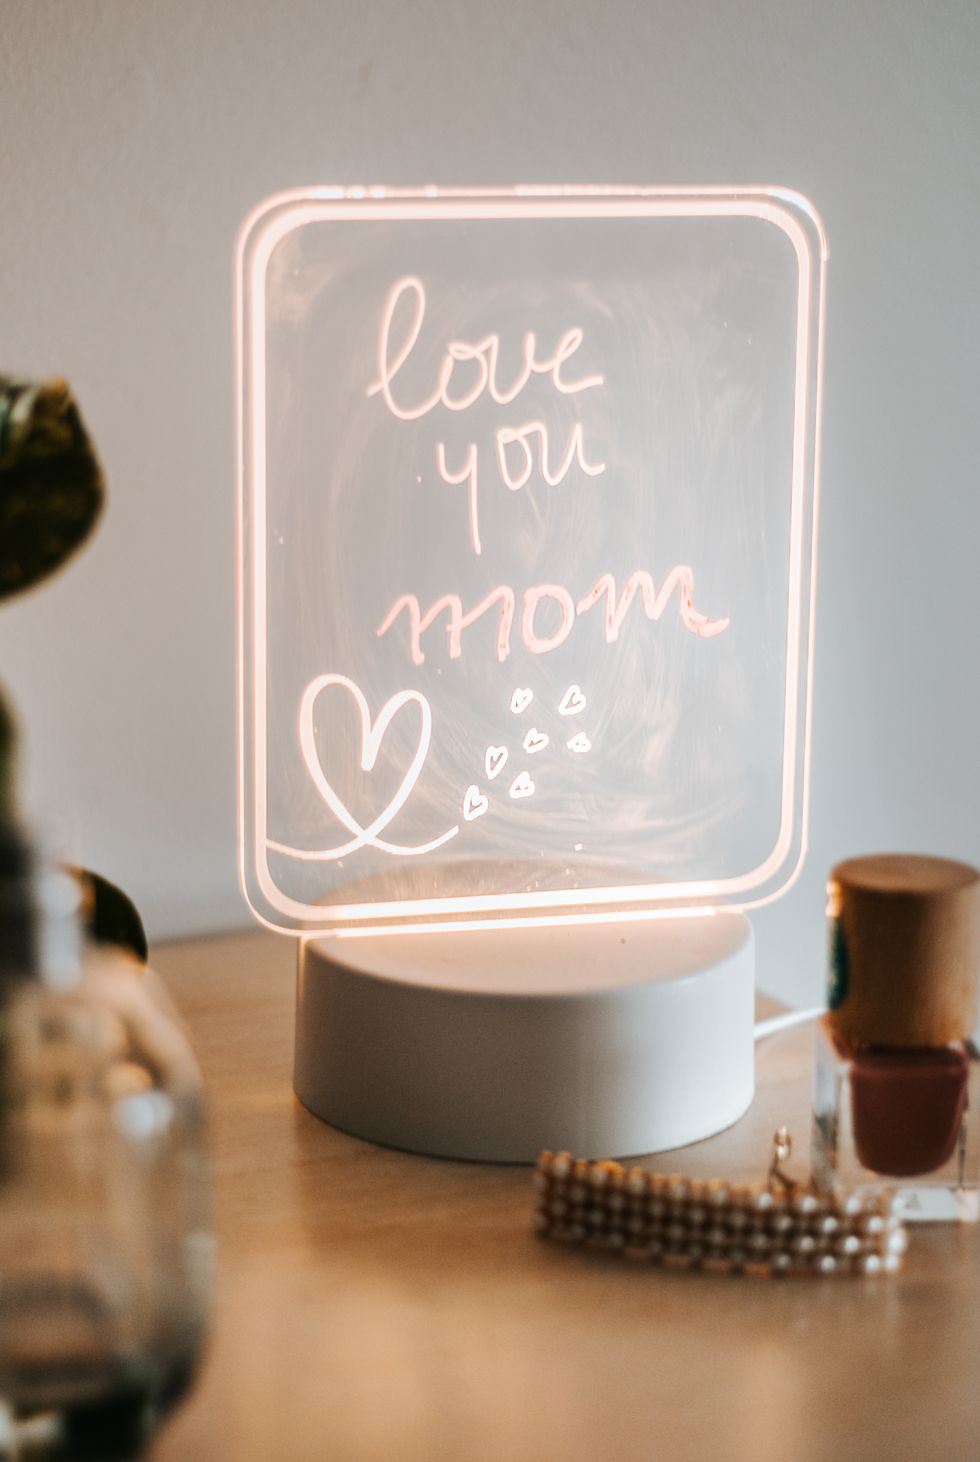 i love you mom quote in decorative lightbox